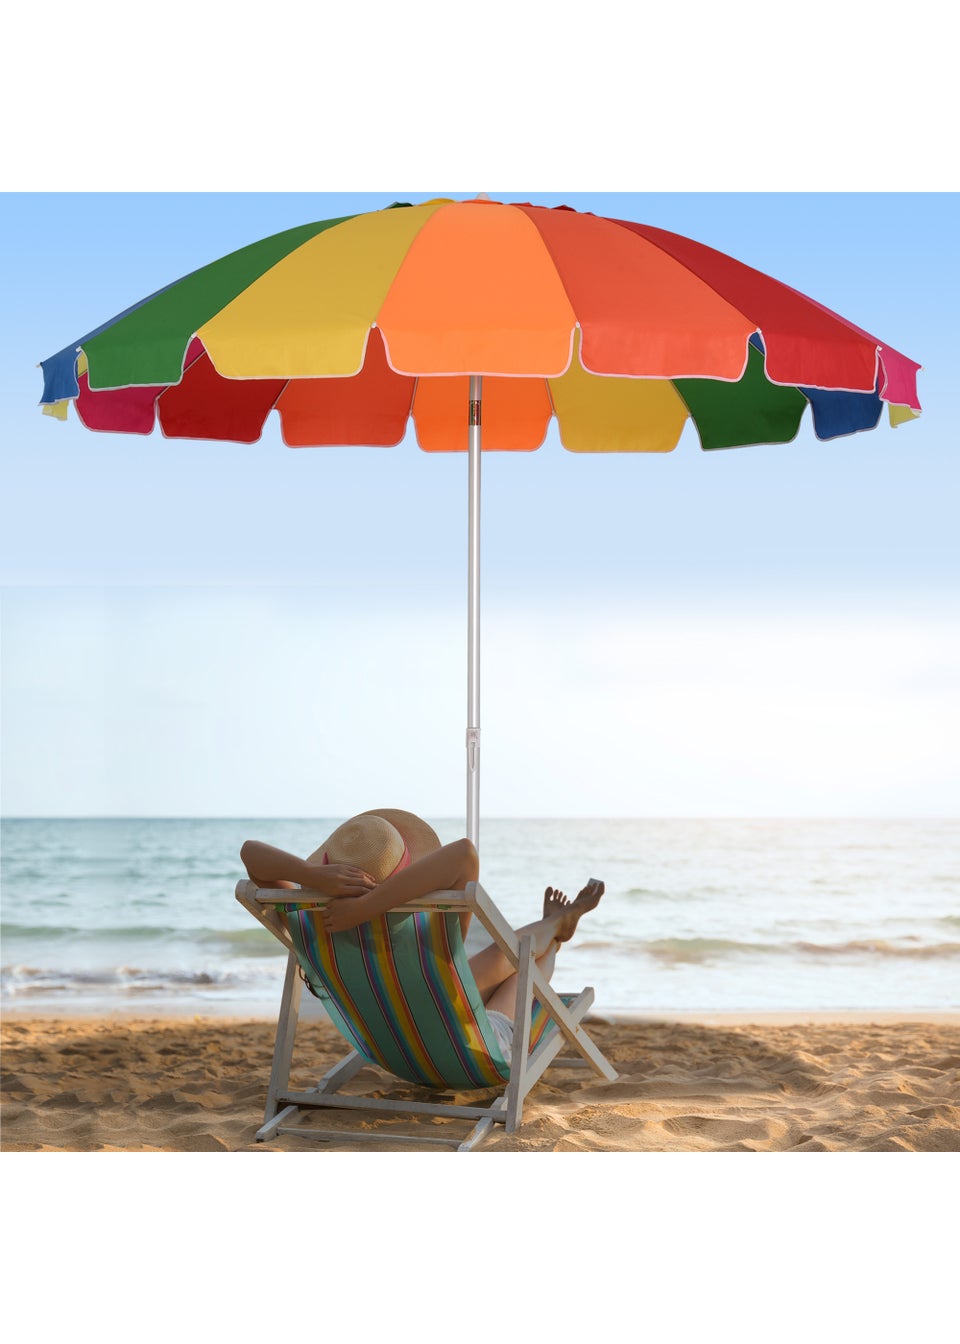 Outsunny 2.4m Adjustable Beach Umbrella w/ Sand Anchor